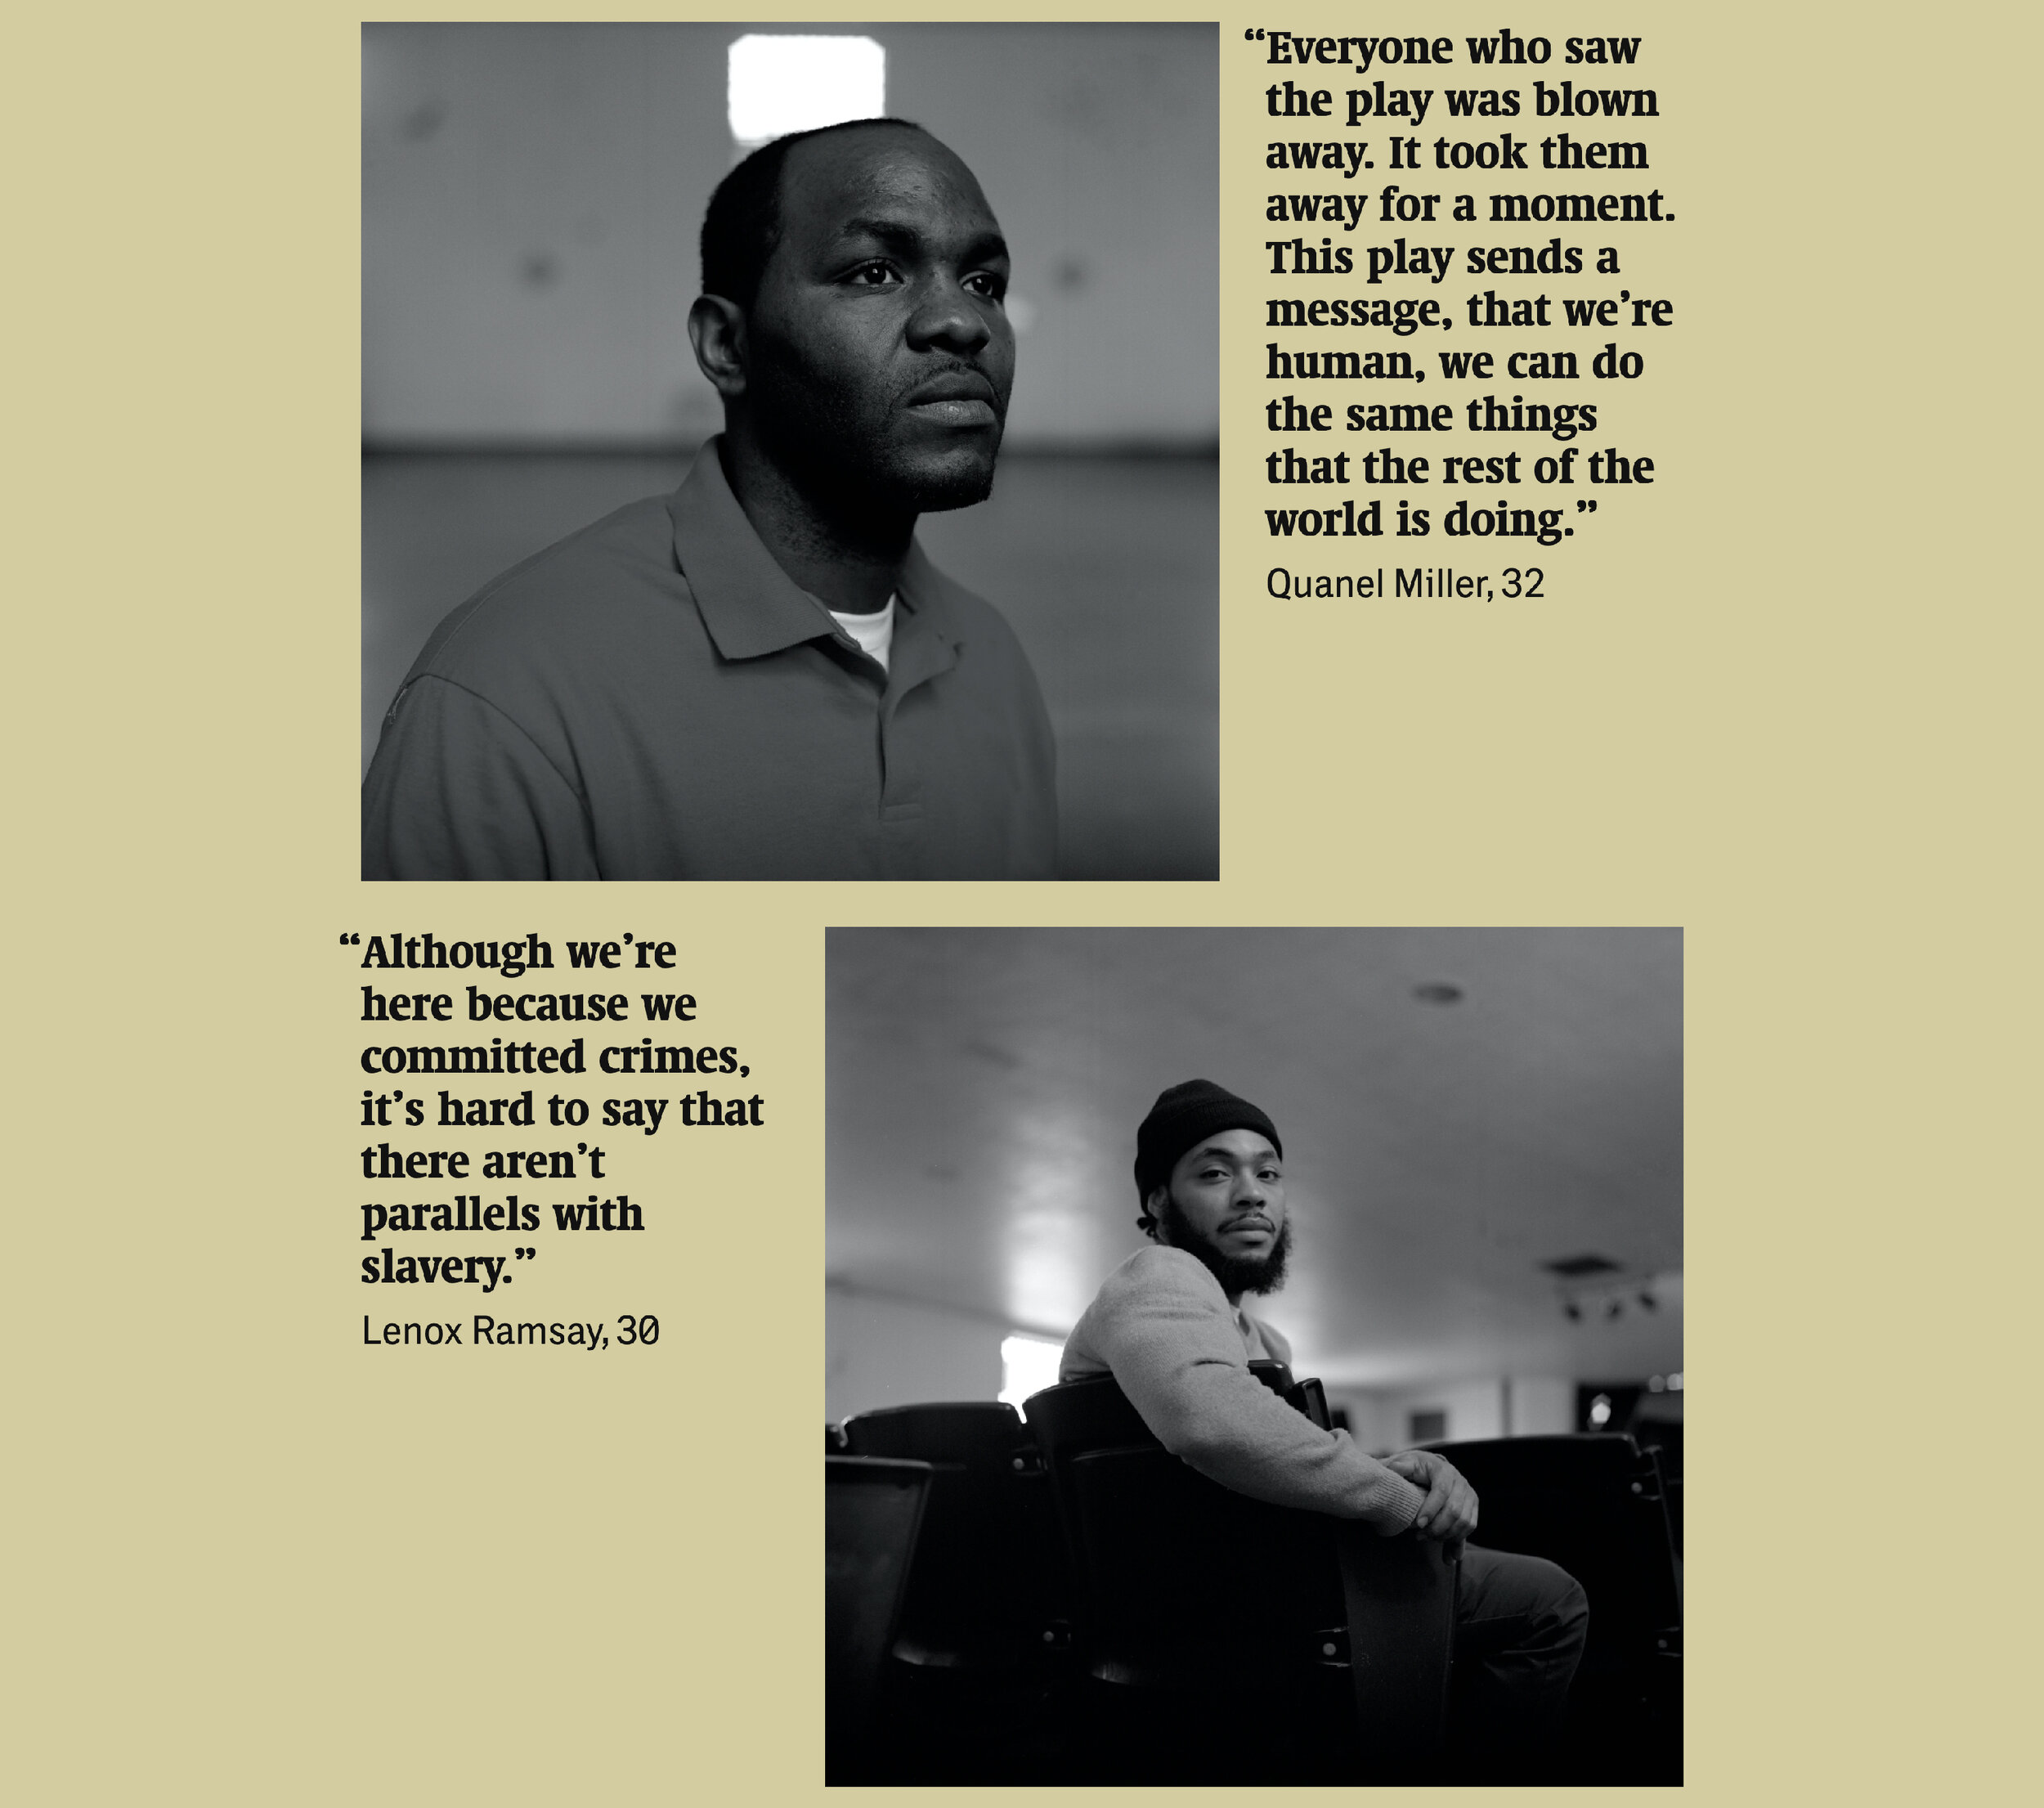  Photography:  Miranda Barnes   Photo Editing: Ariel Zambelich  Design: Fei Liu + Ariel Zambelich  Story:  A Play About Slavery Pushes Boundaries in a New York Prison  